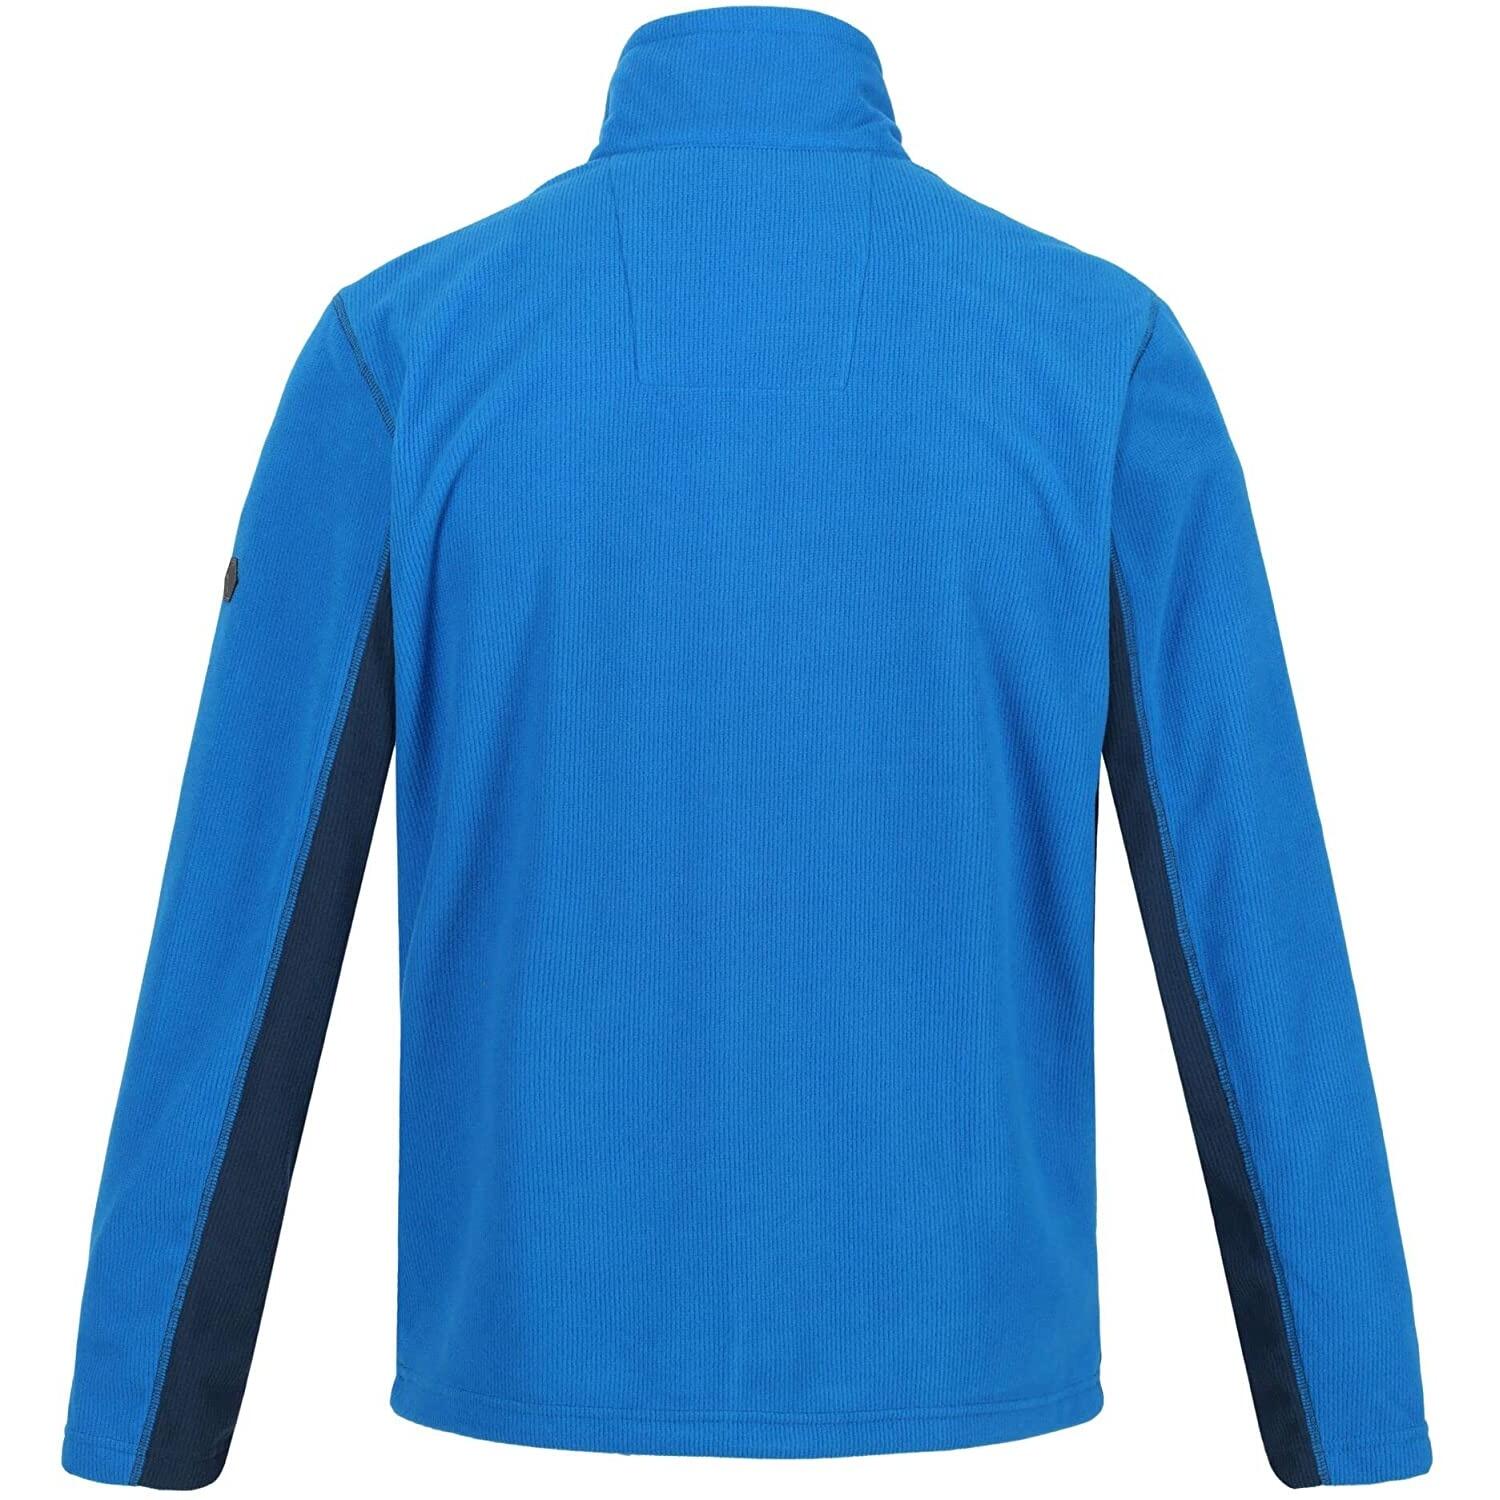 Mens Stanner Full Zip Fleece Jacket (Imperial Blue/Moonlight Denim) 2/5